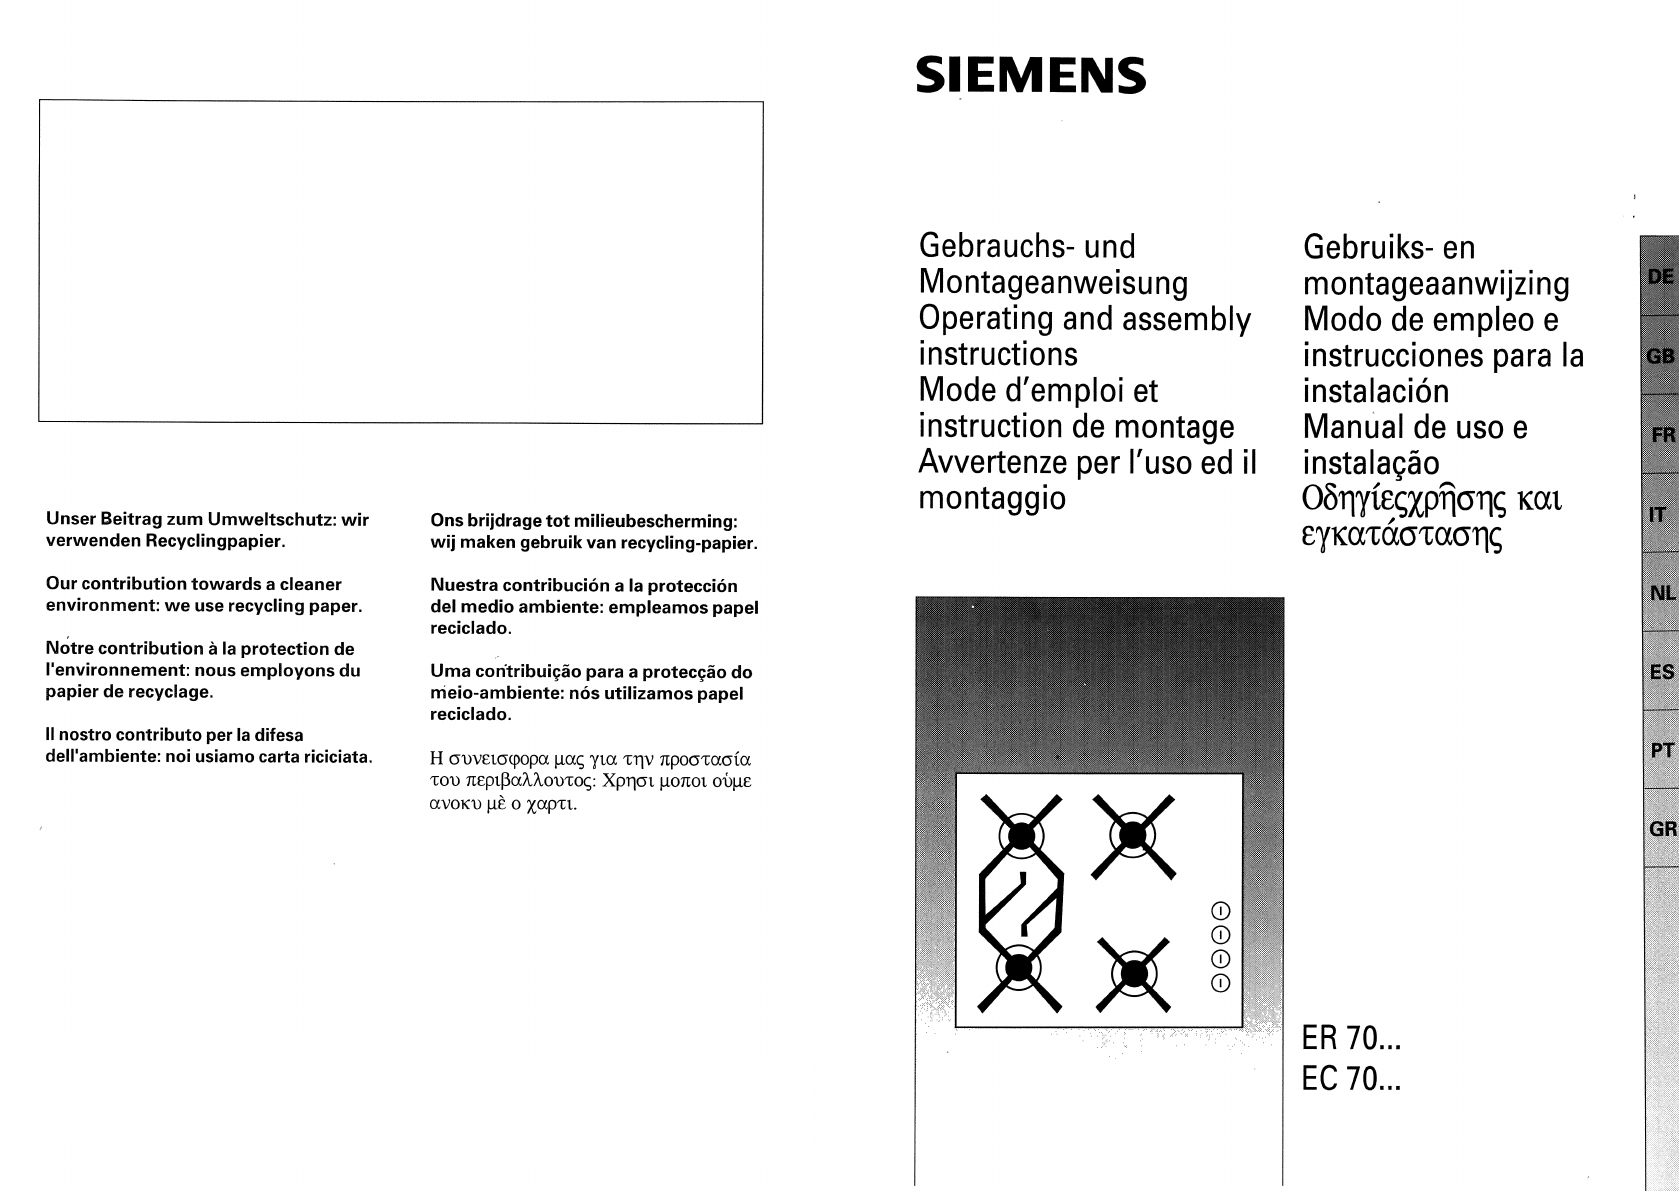 Manual Siemens er 70461 eu (page 1 of 66) (English, German